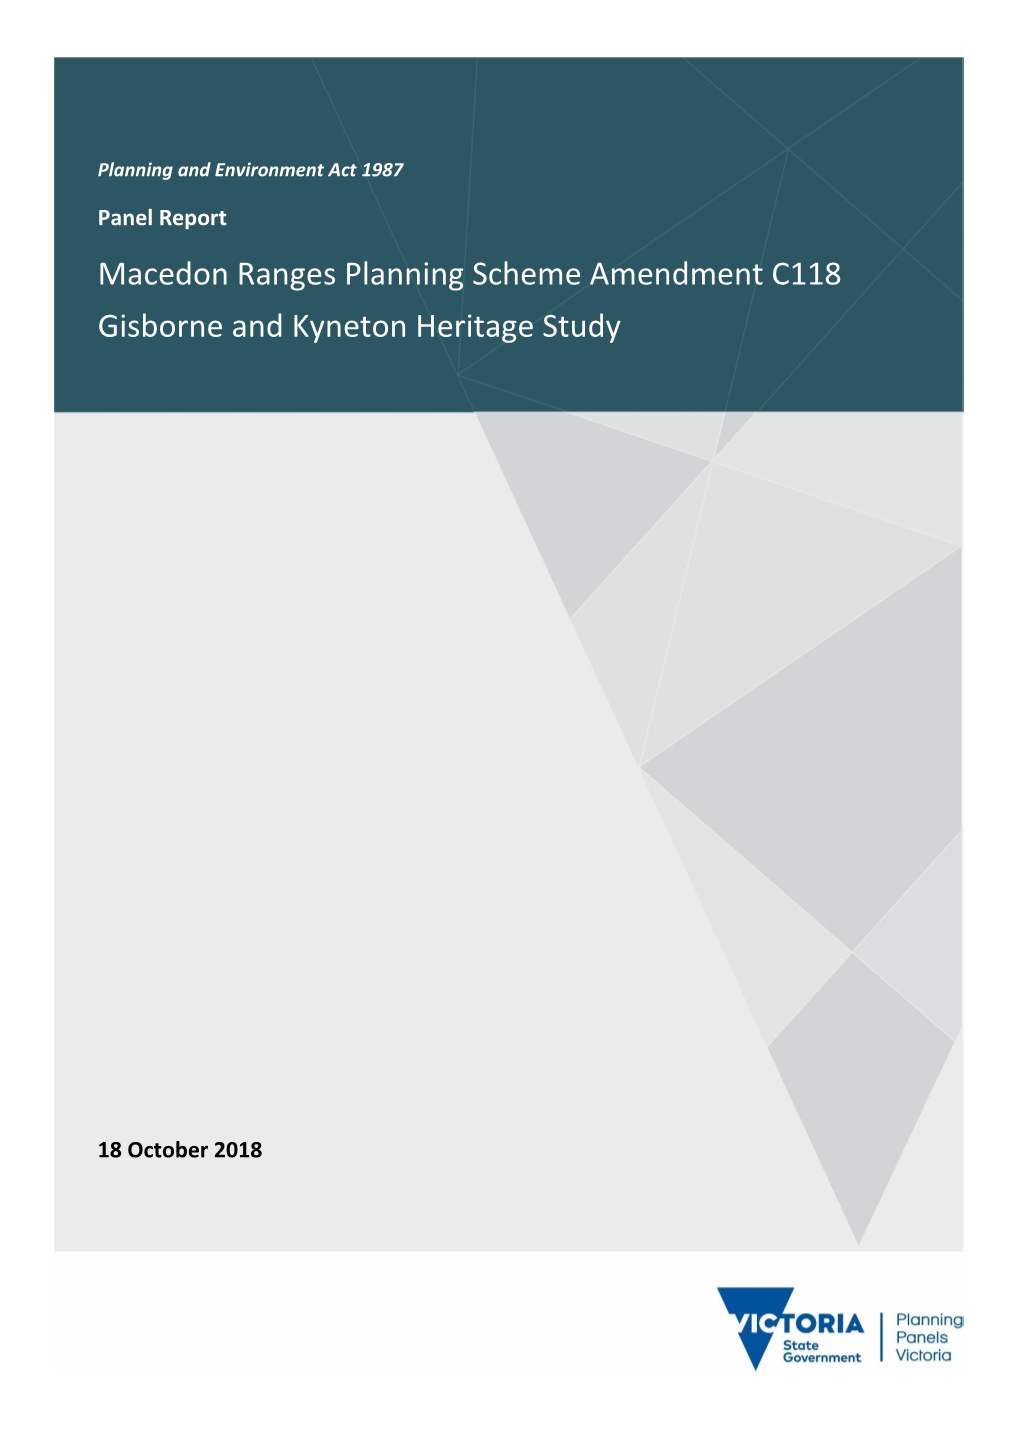 Macedon Ranges Planning Scheme Amendment C118 Gisborne and Kyneton Heritage Study